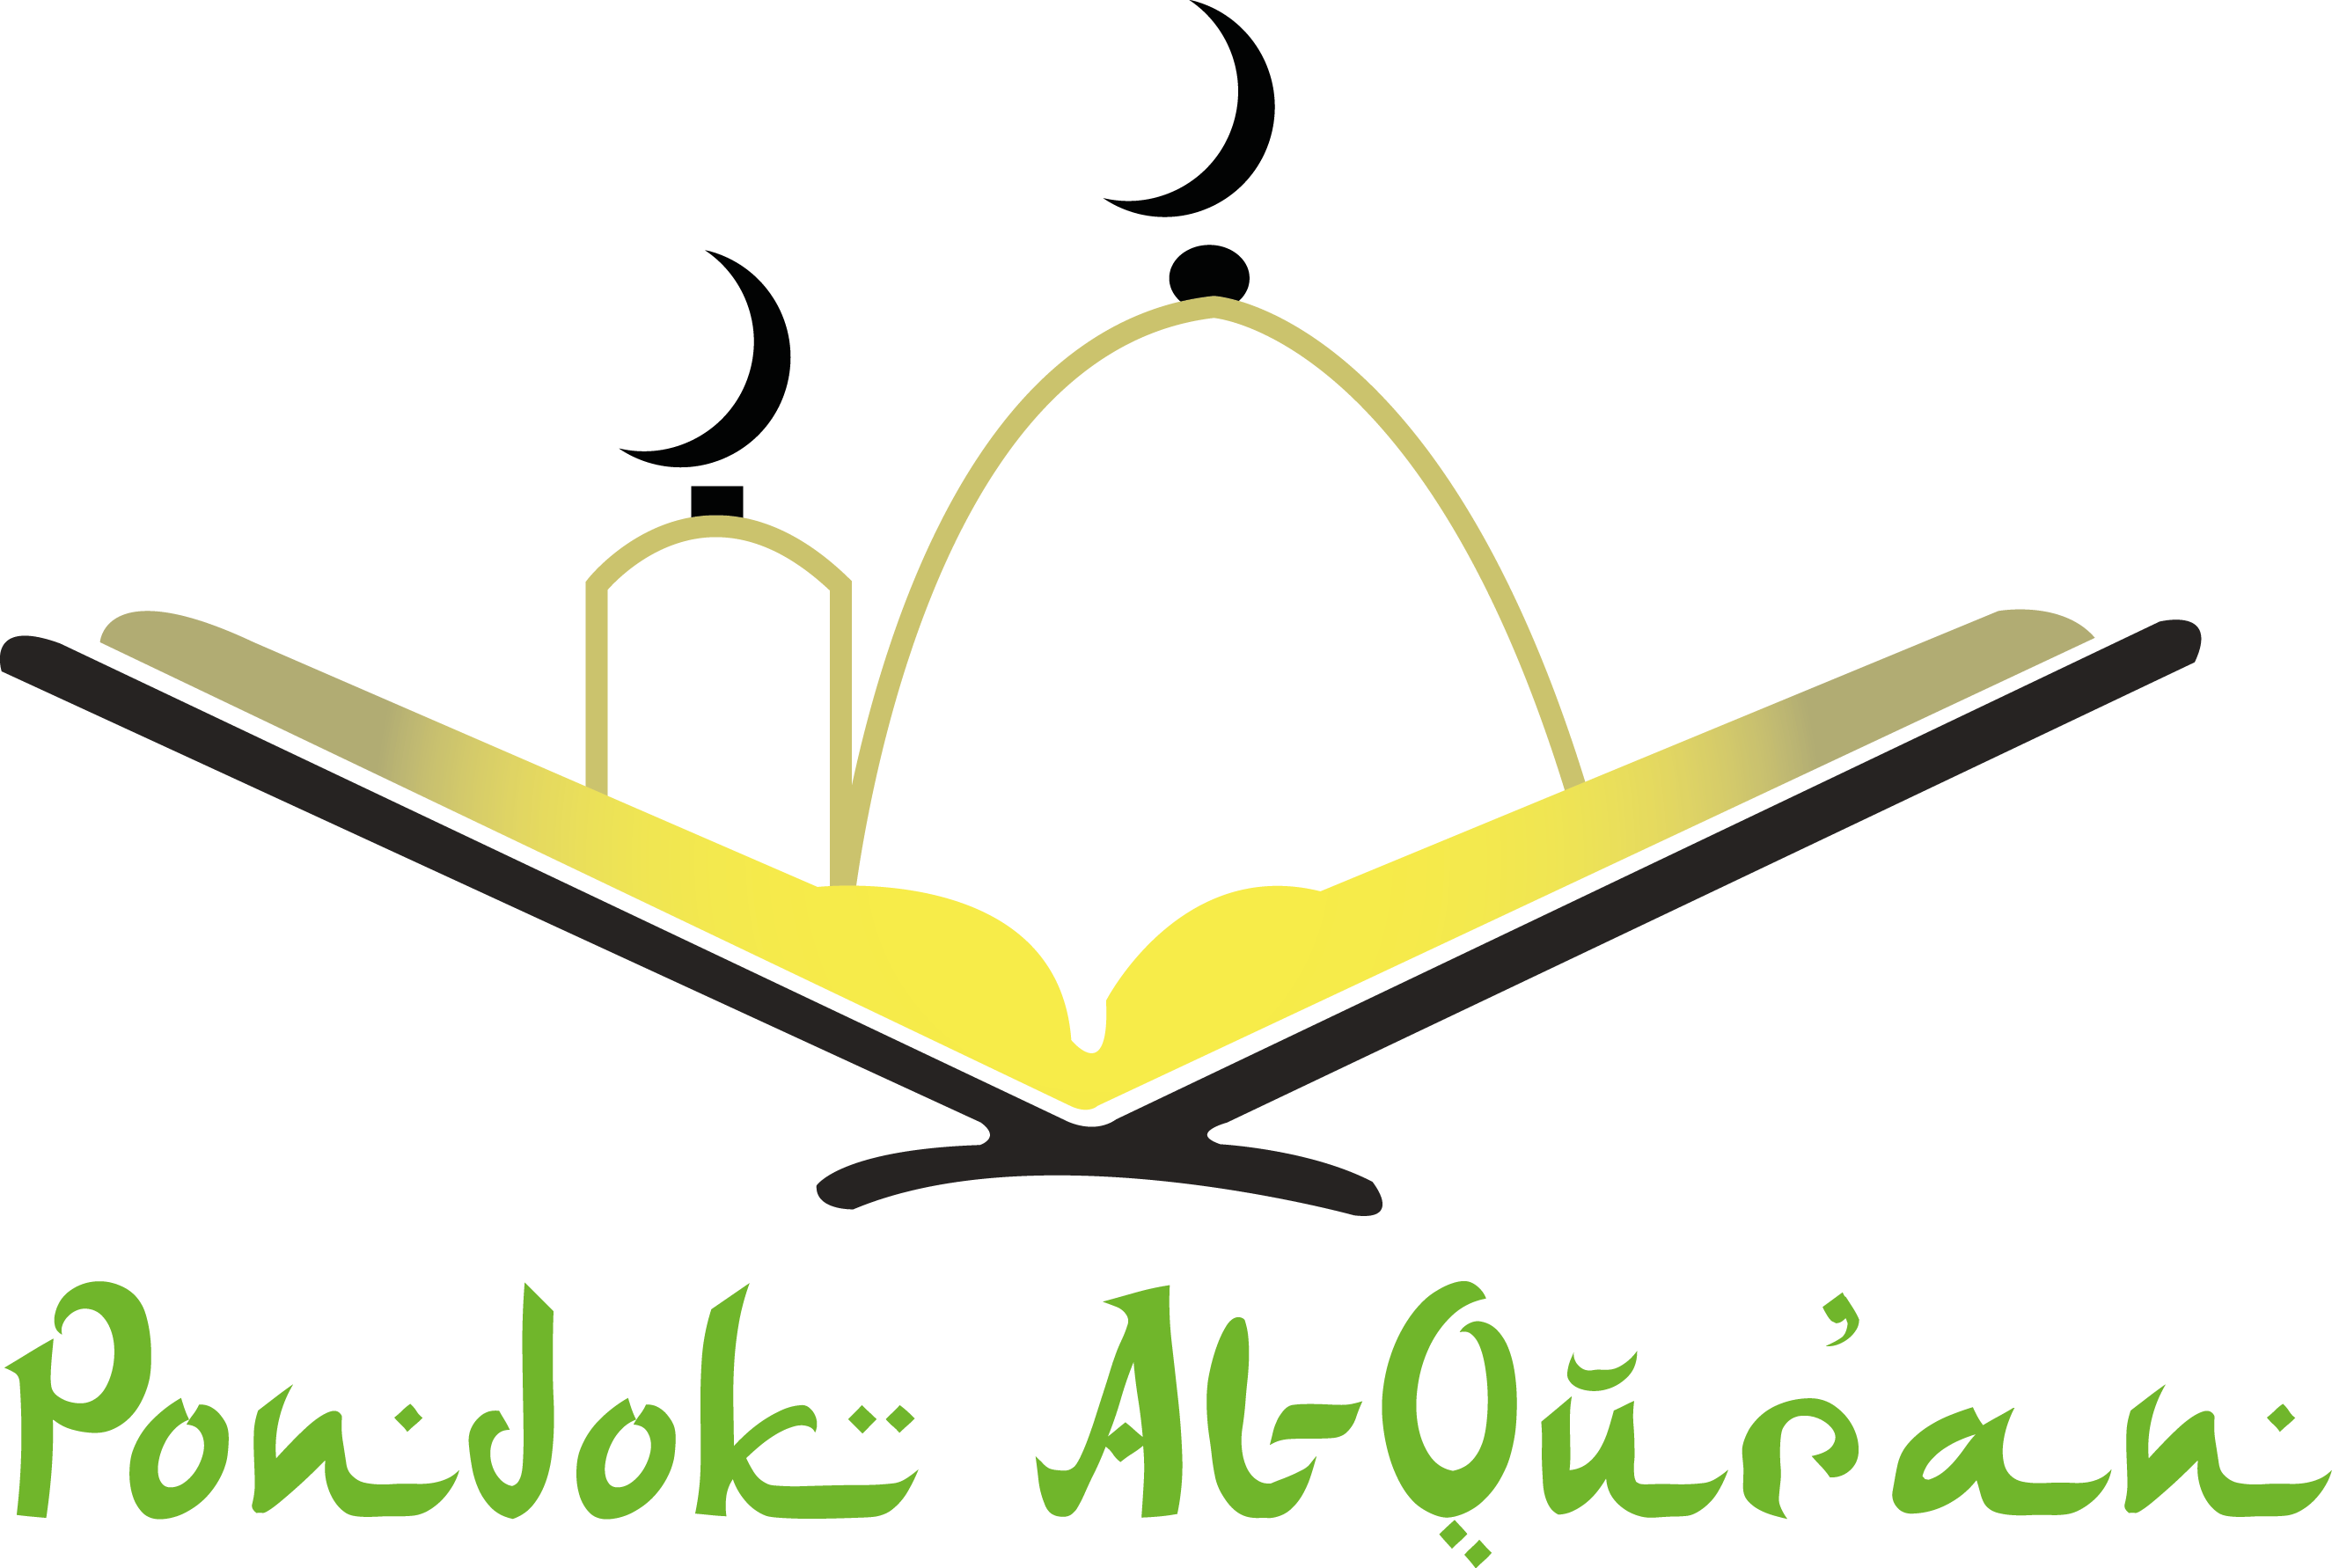 Quran Islam Muhammad's First Revelation Logo - Logo Alquran (2650x1782)